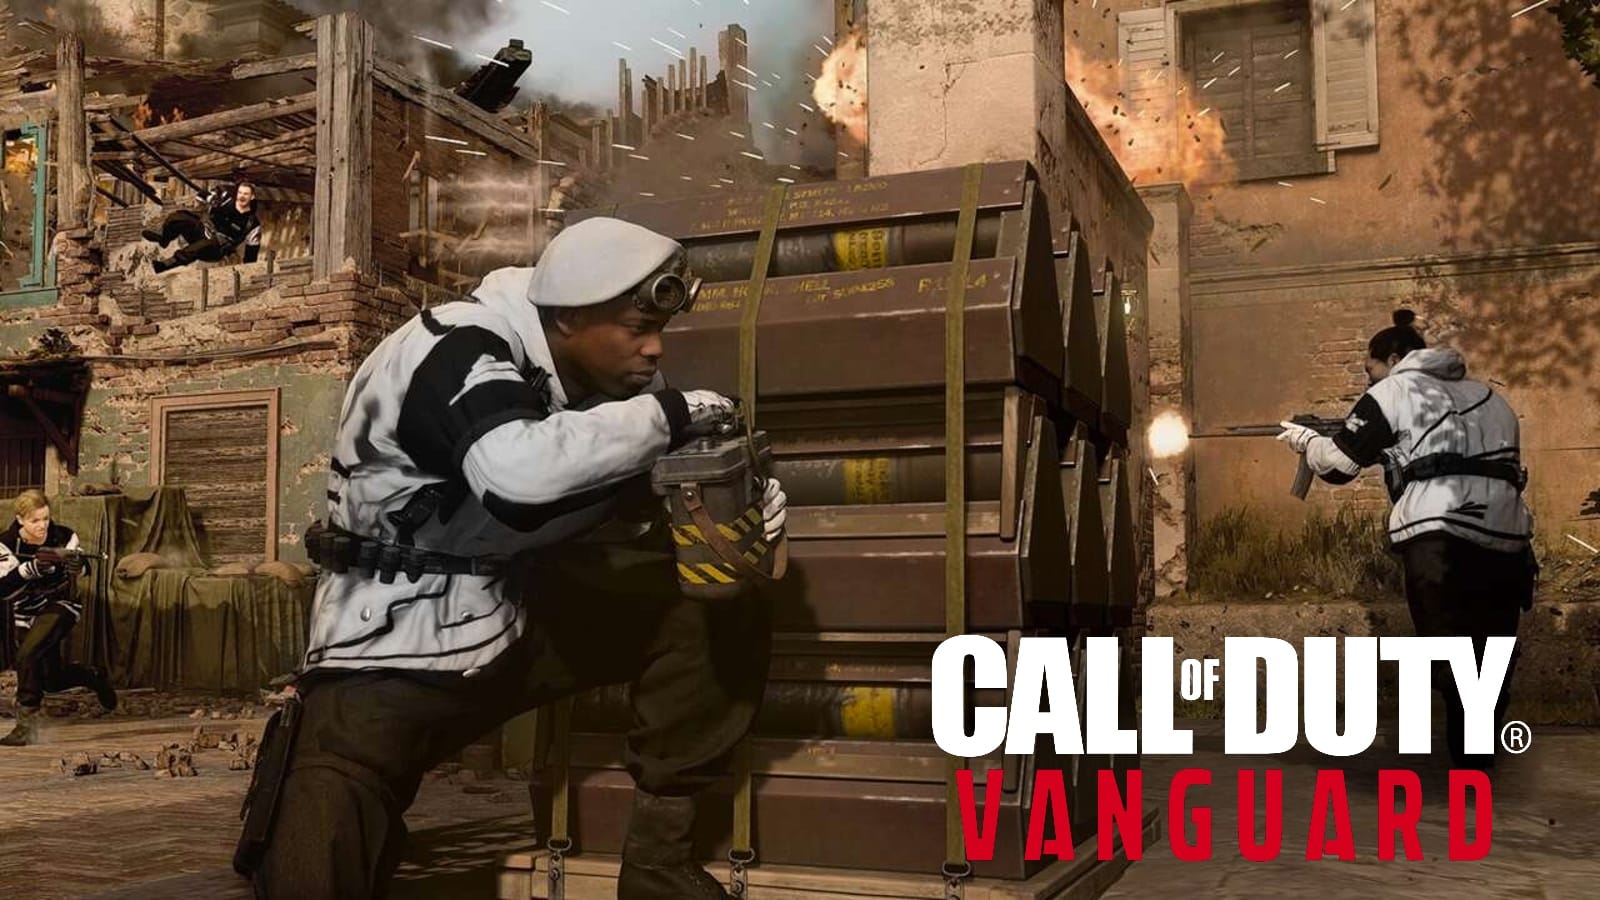 Vanguard CDL-Skin-Operator platziert Bombe in Search and Destroy, mit Vanguard-Logo in der Ecke